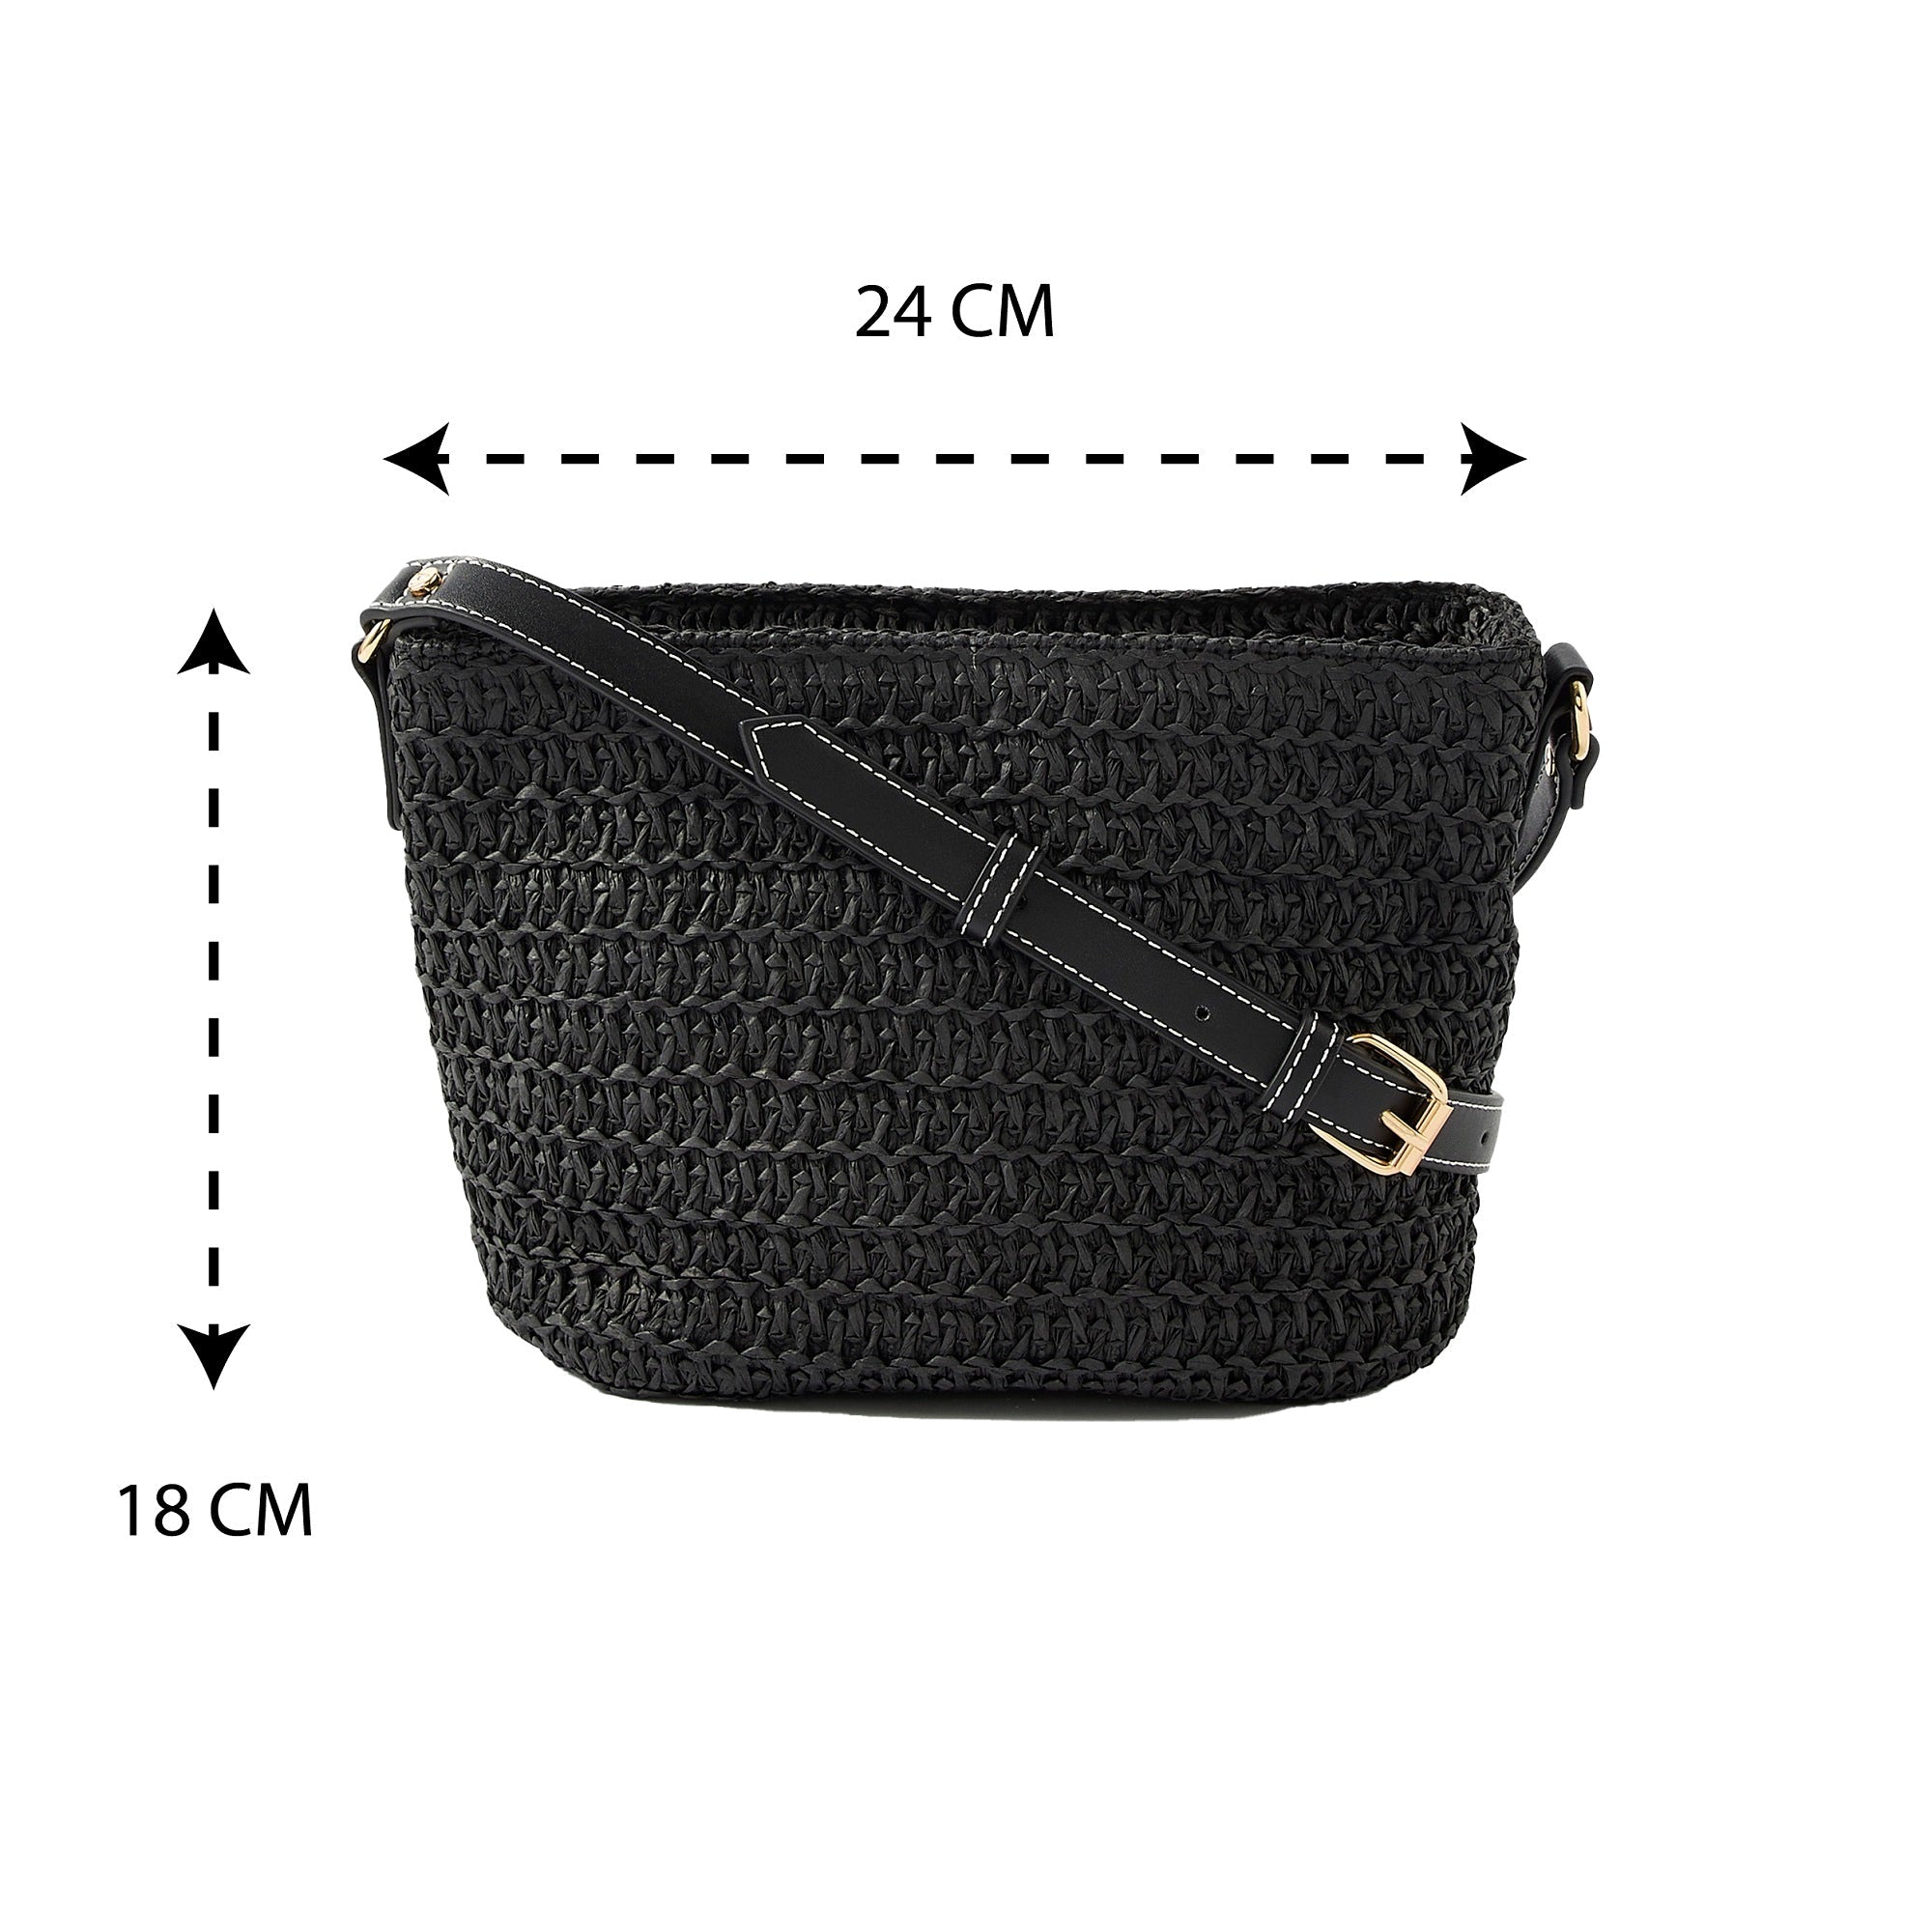 Accessorize London Women's Faux Leather Black Maeve Raffia Sling Bag